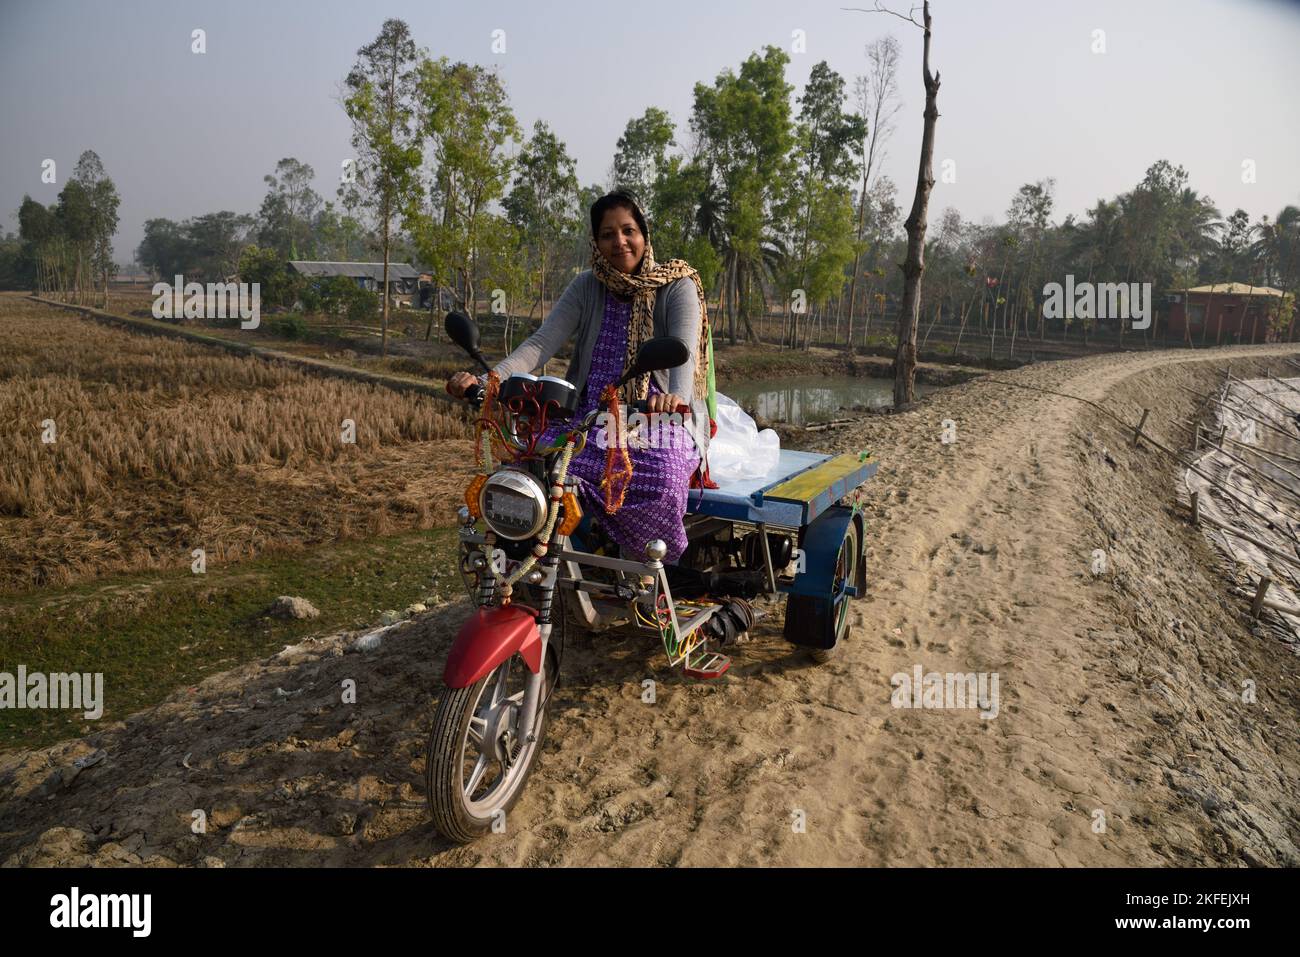 Femme à cheval tricycle électrique, Pakhiralay, Gosaba, Sunderban, 24 Pargana Sud, Bengale-Occidental, Inde Banque D'Images